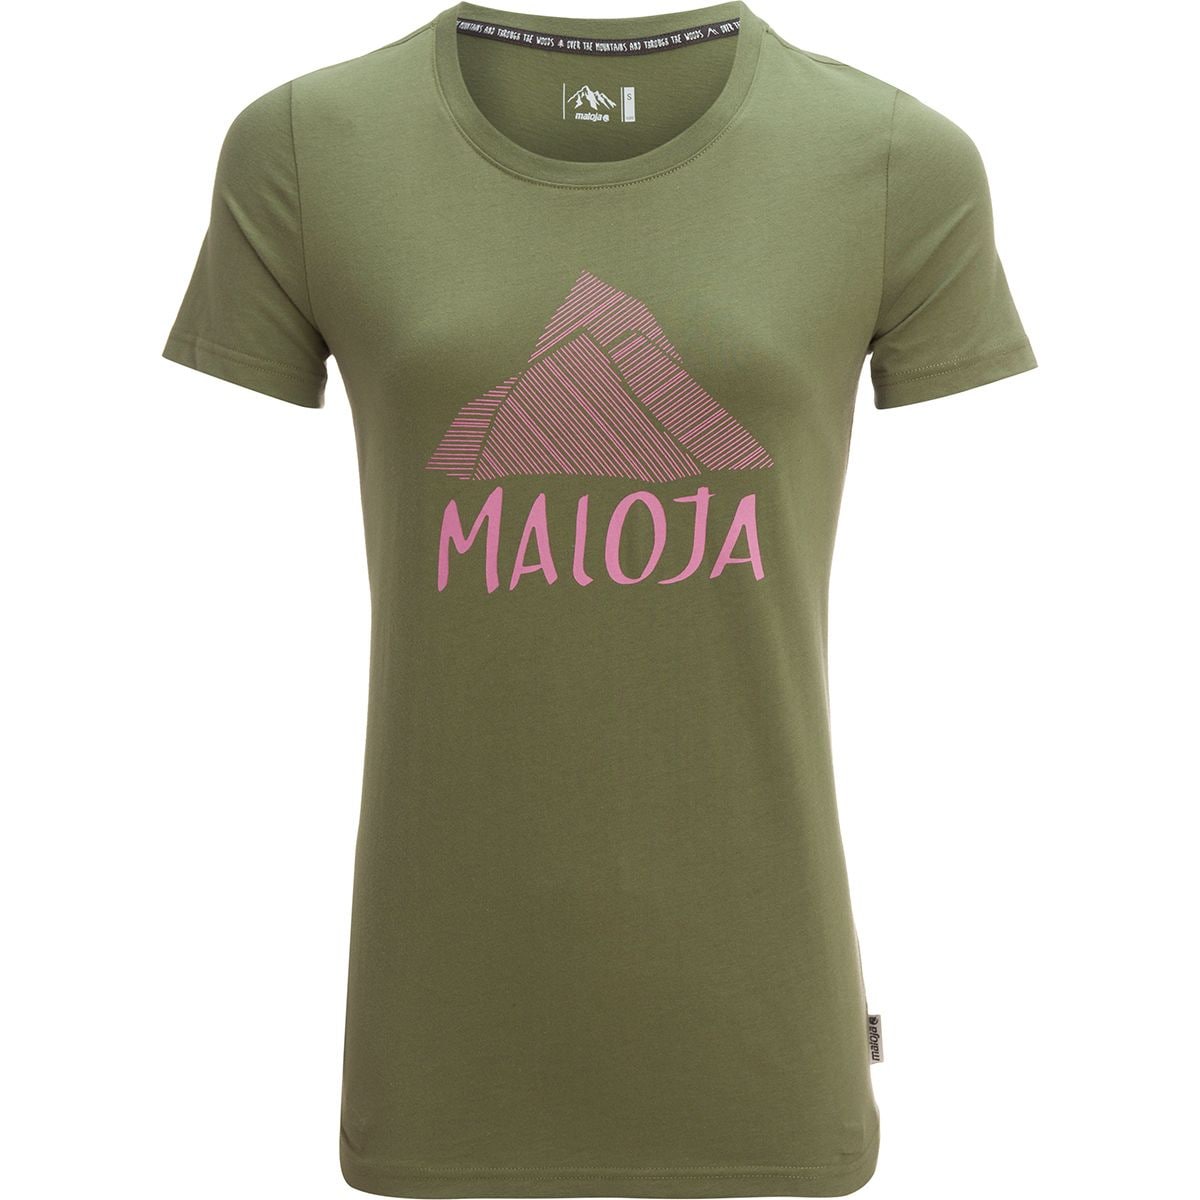 Maloja PitschenM. T-Shirt - Women's